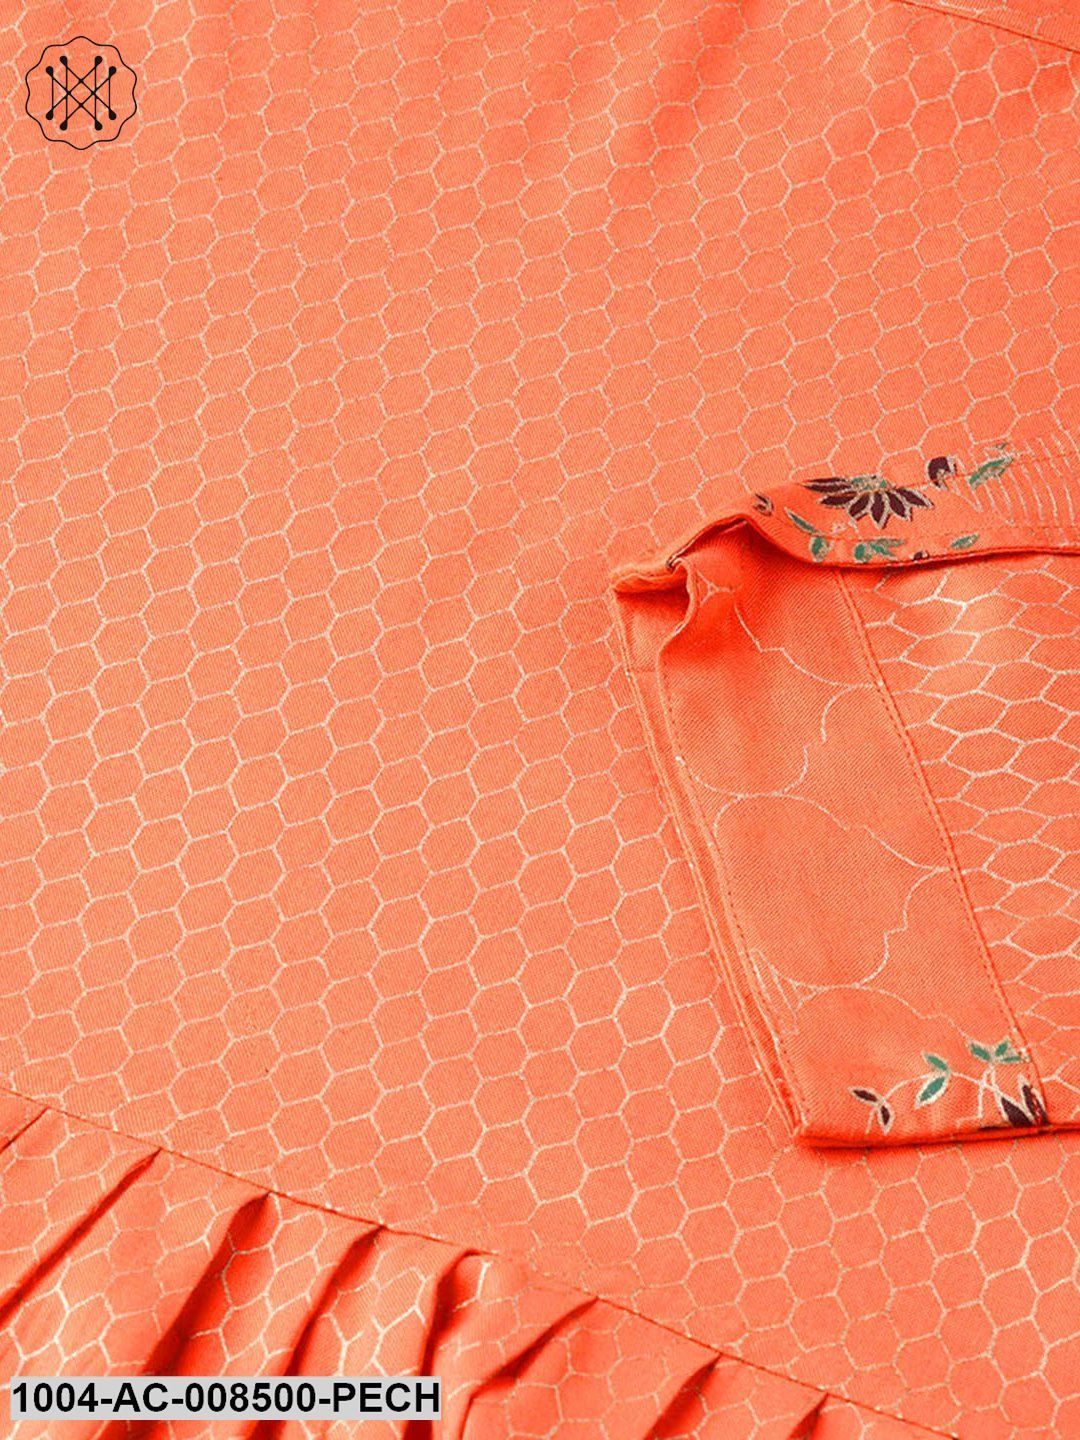 Peach Printed 3/4Th Sleeve Rayon Maxi Dress With Border Design